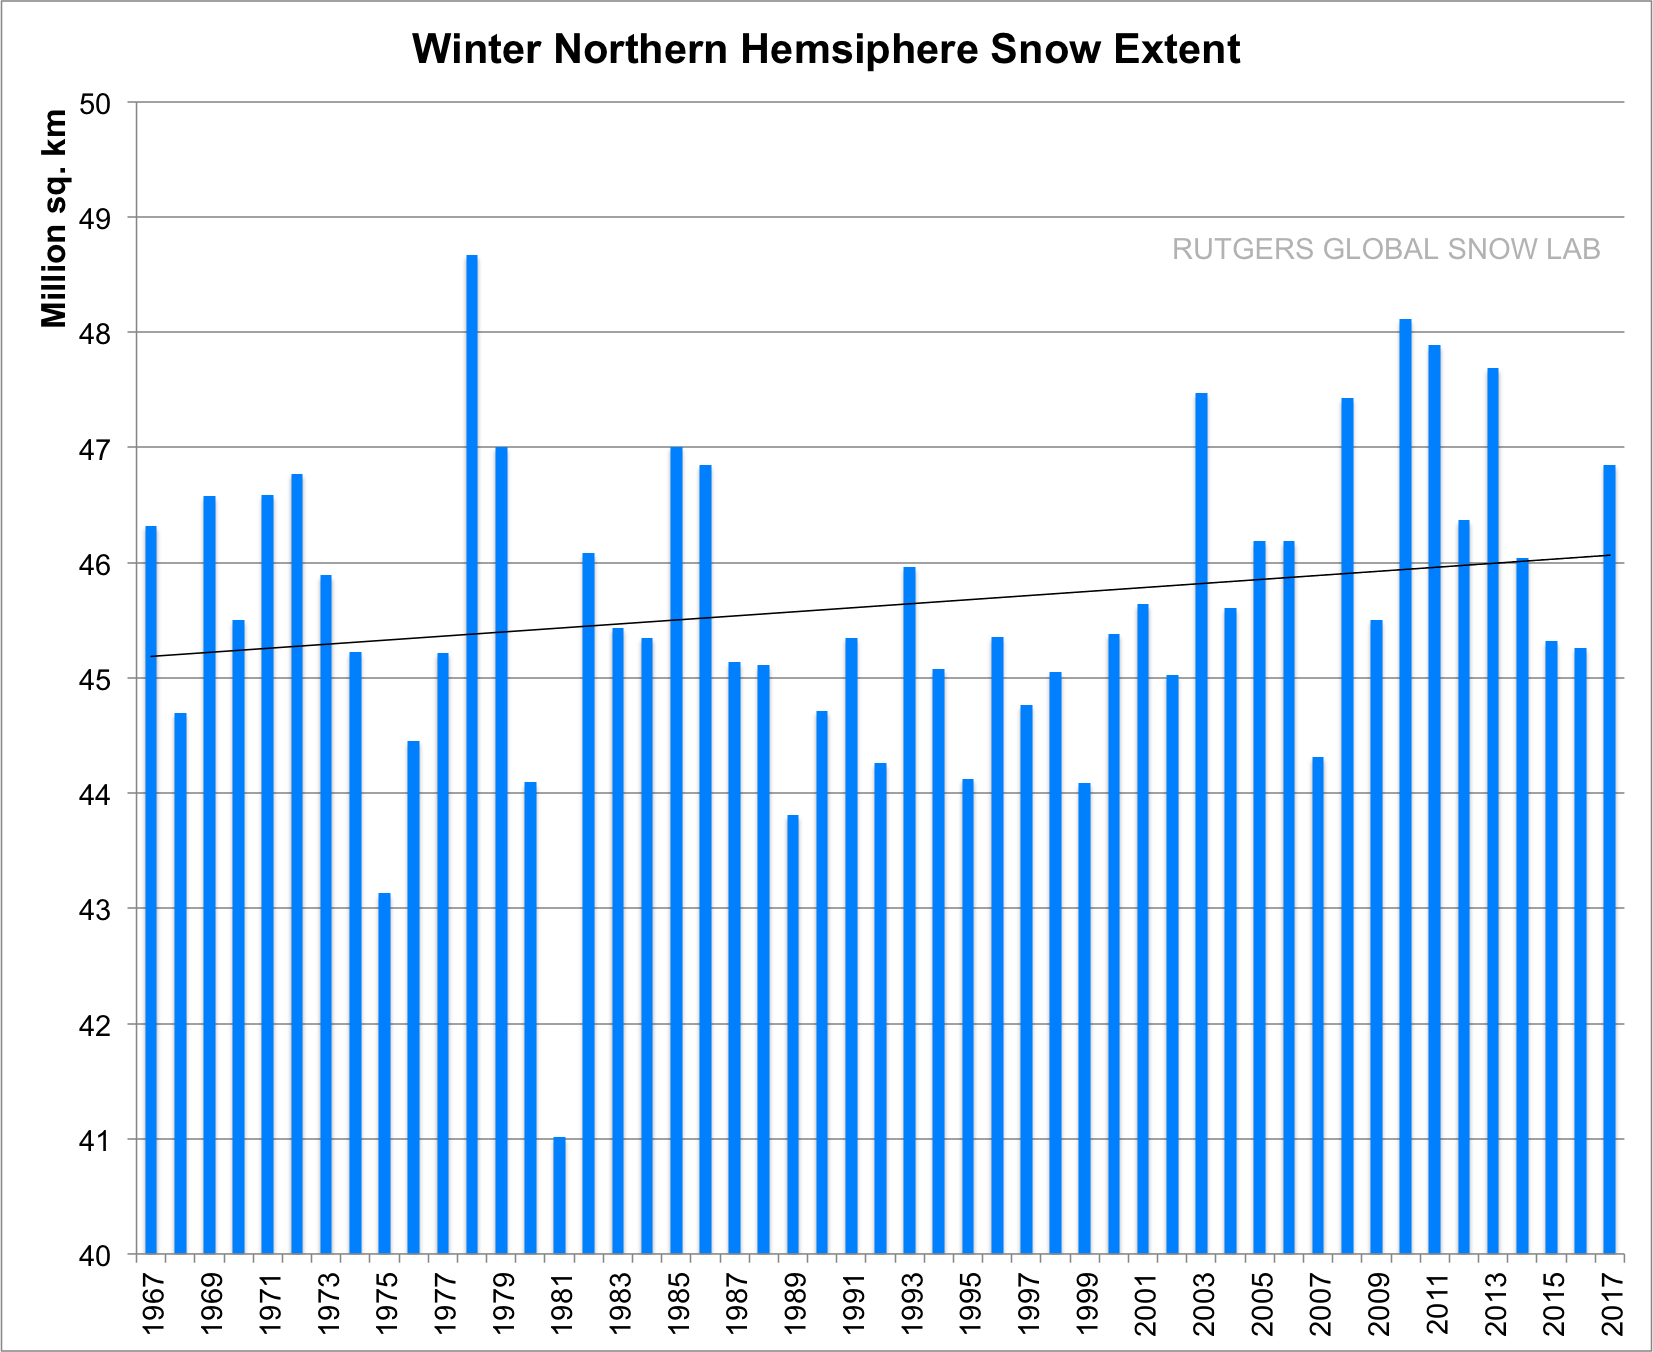  Northern Hemisphere snow extent graph